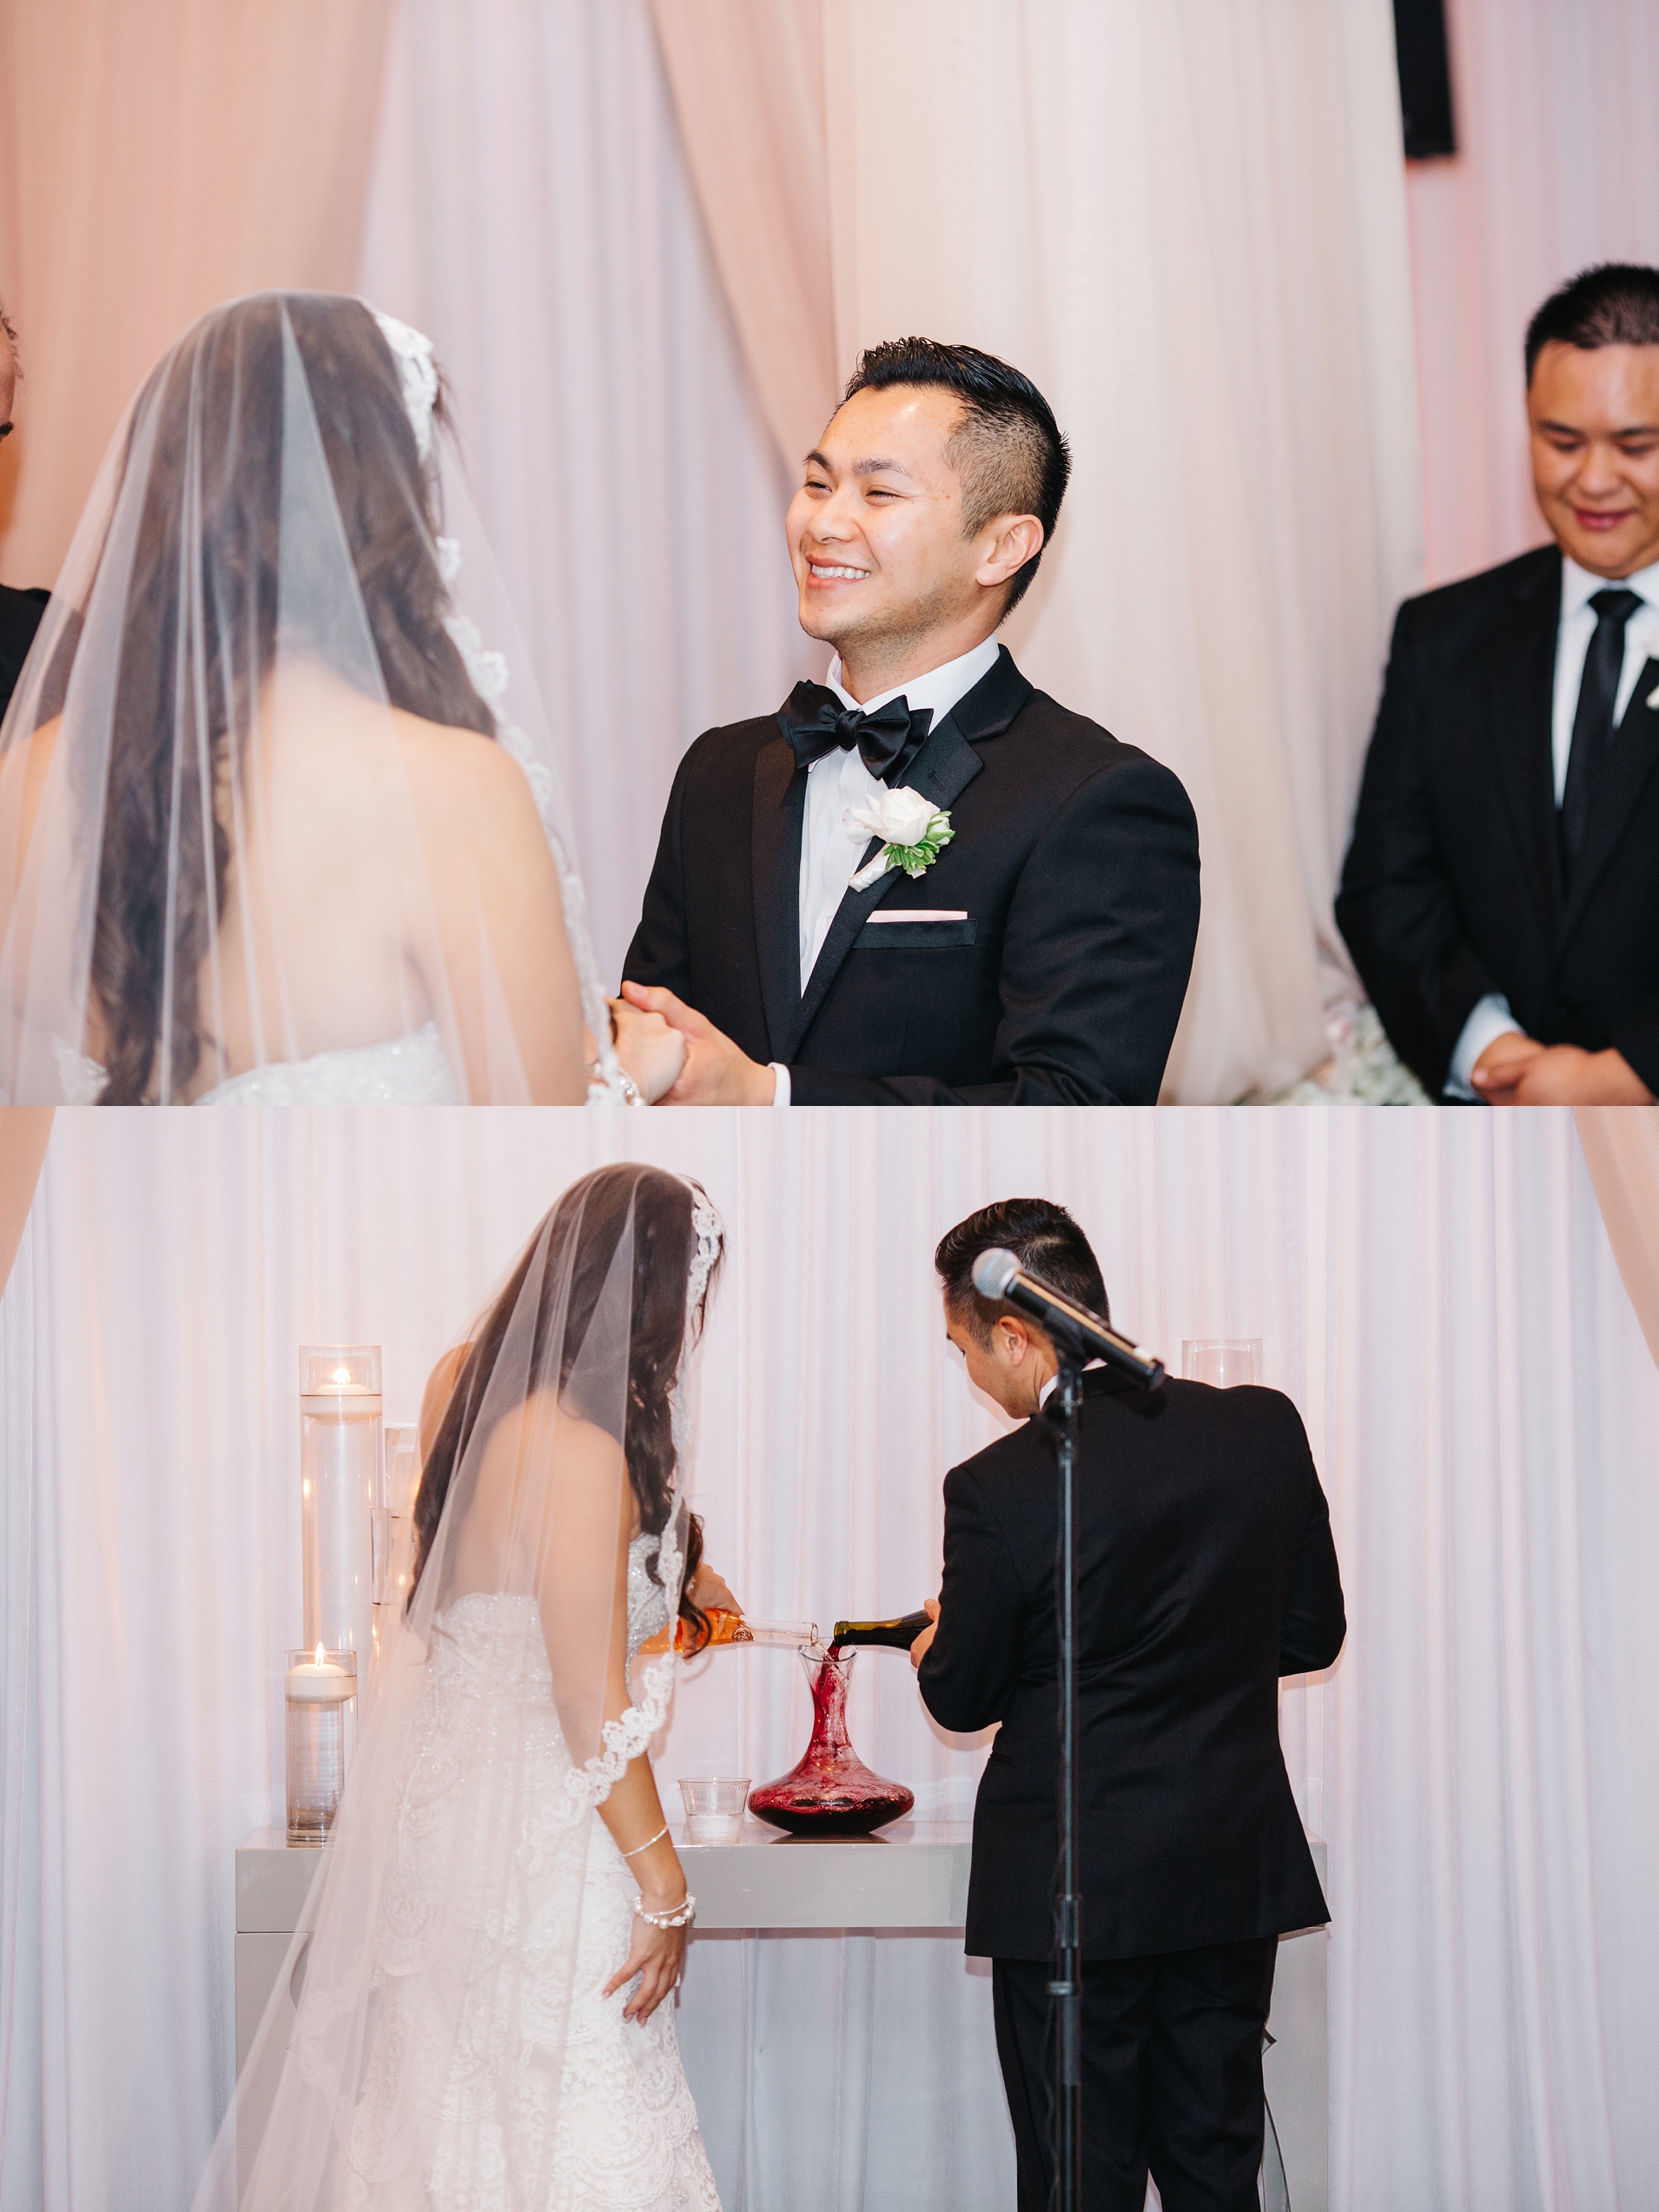 Wedding Ceremony Photos at Venue by Three Petals Wedding by Brittney Hannon Photography